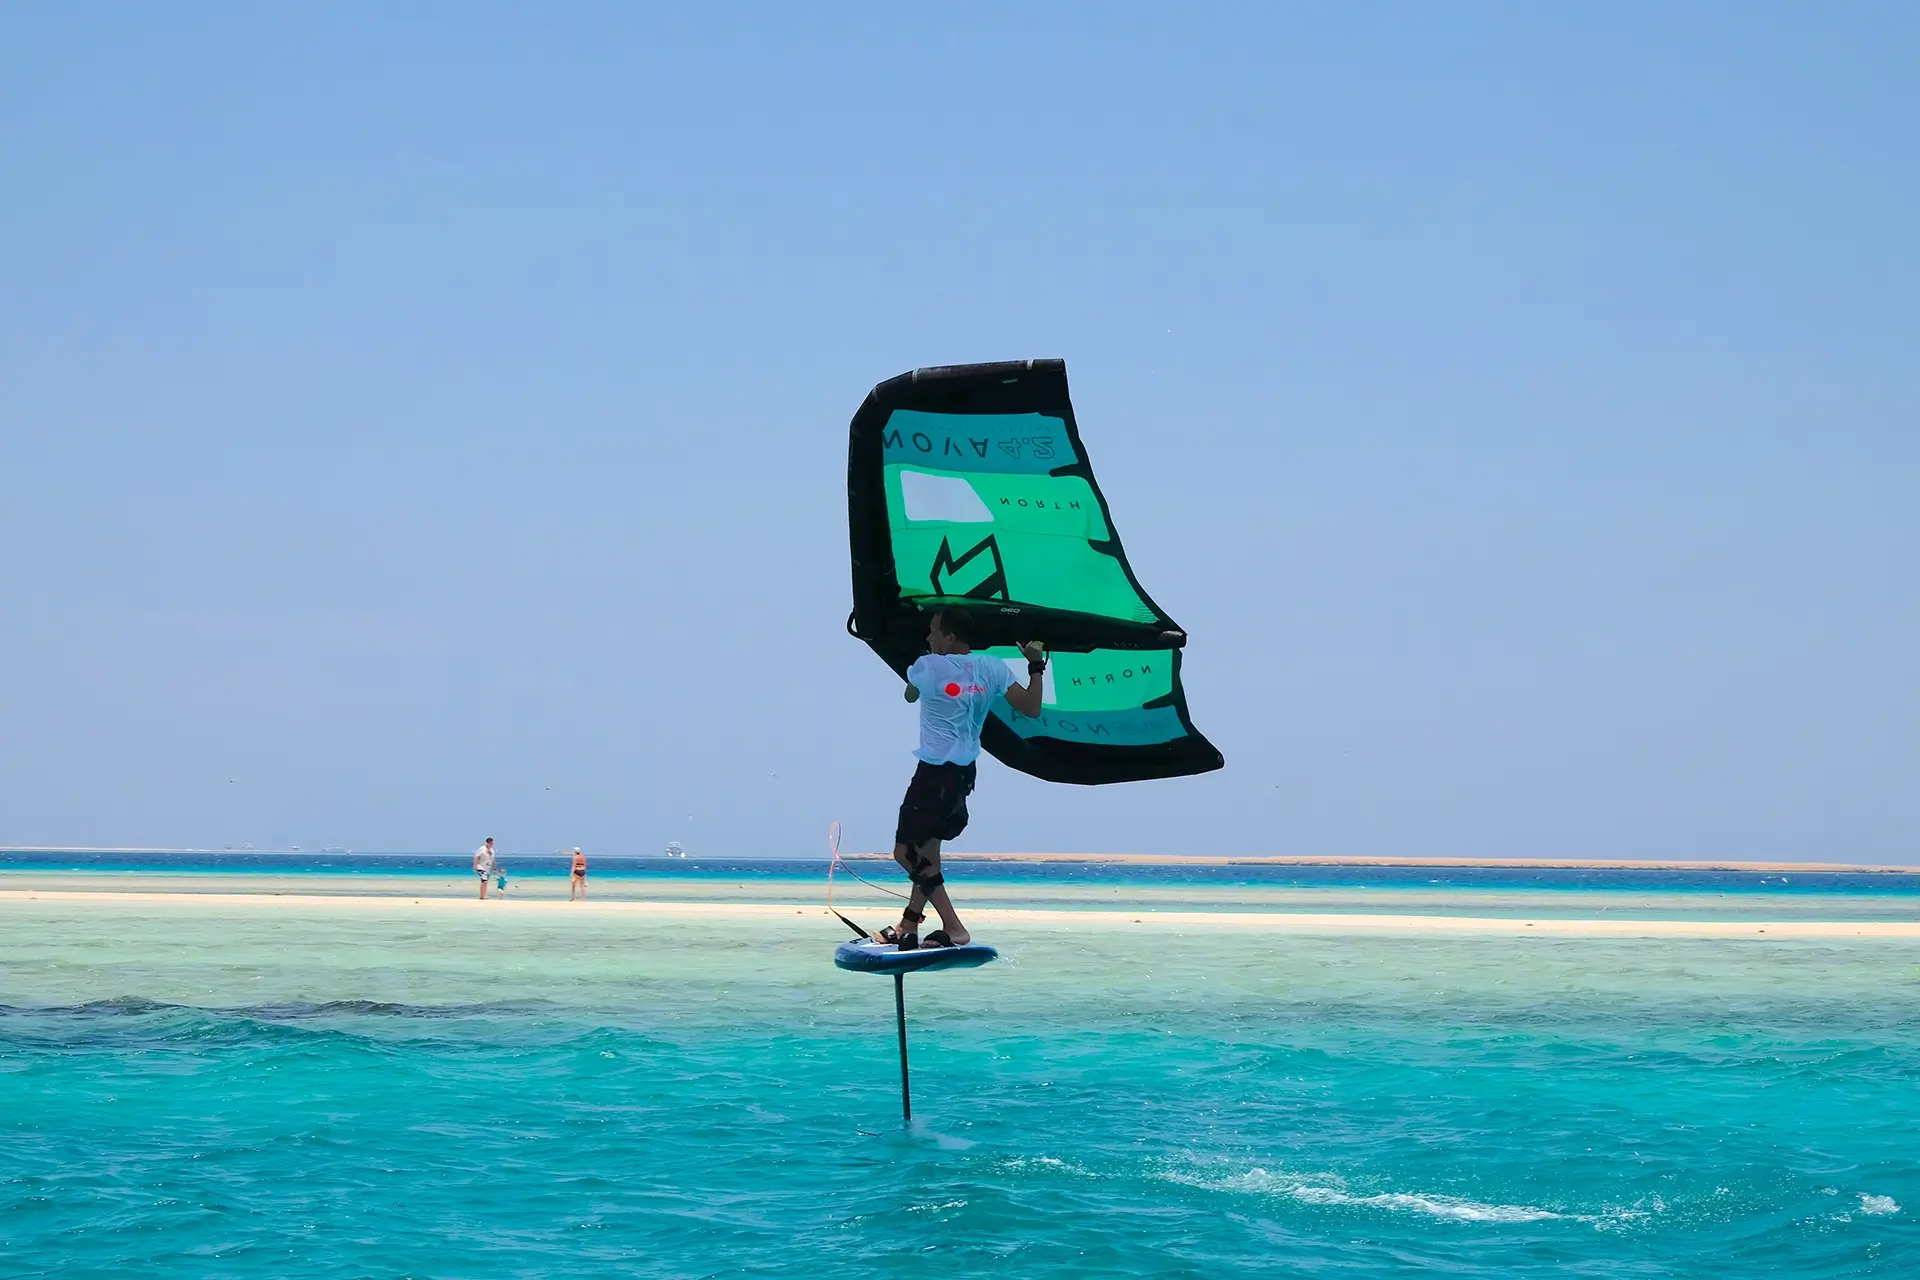 Planet Allsports Surf and Wingfoil School Soma Bay Egypt Caribbean World Resort twisted jumpFelix Quadfass